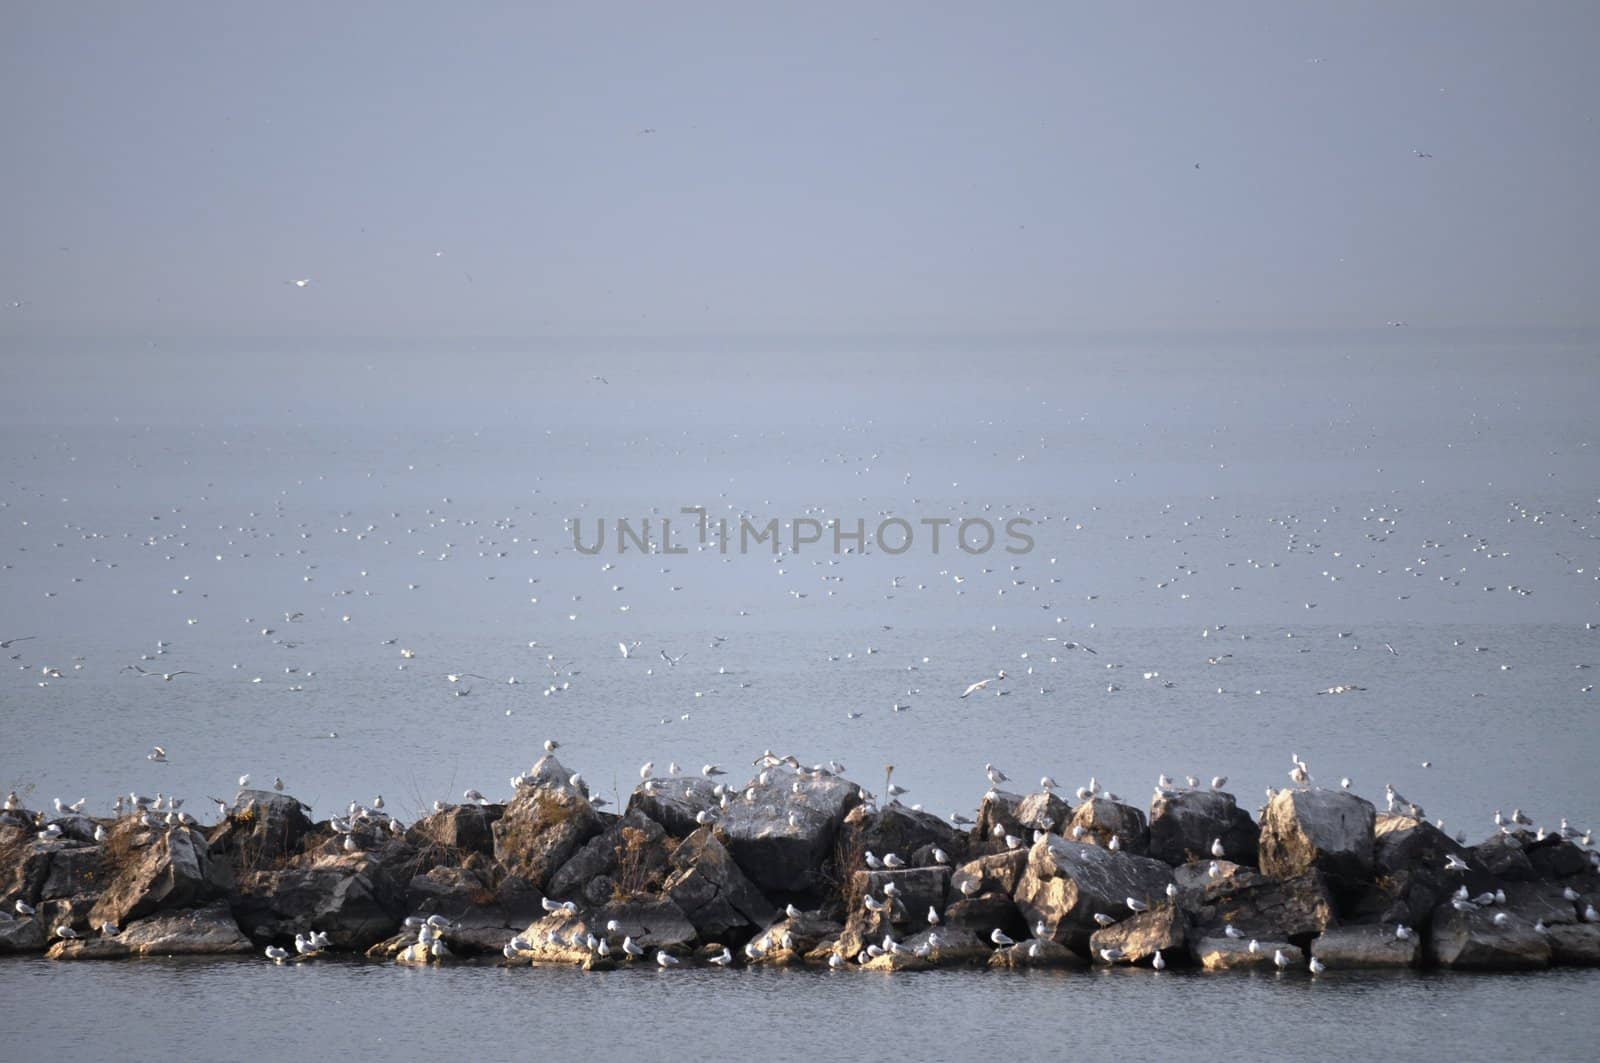 Birds on water background